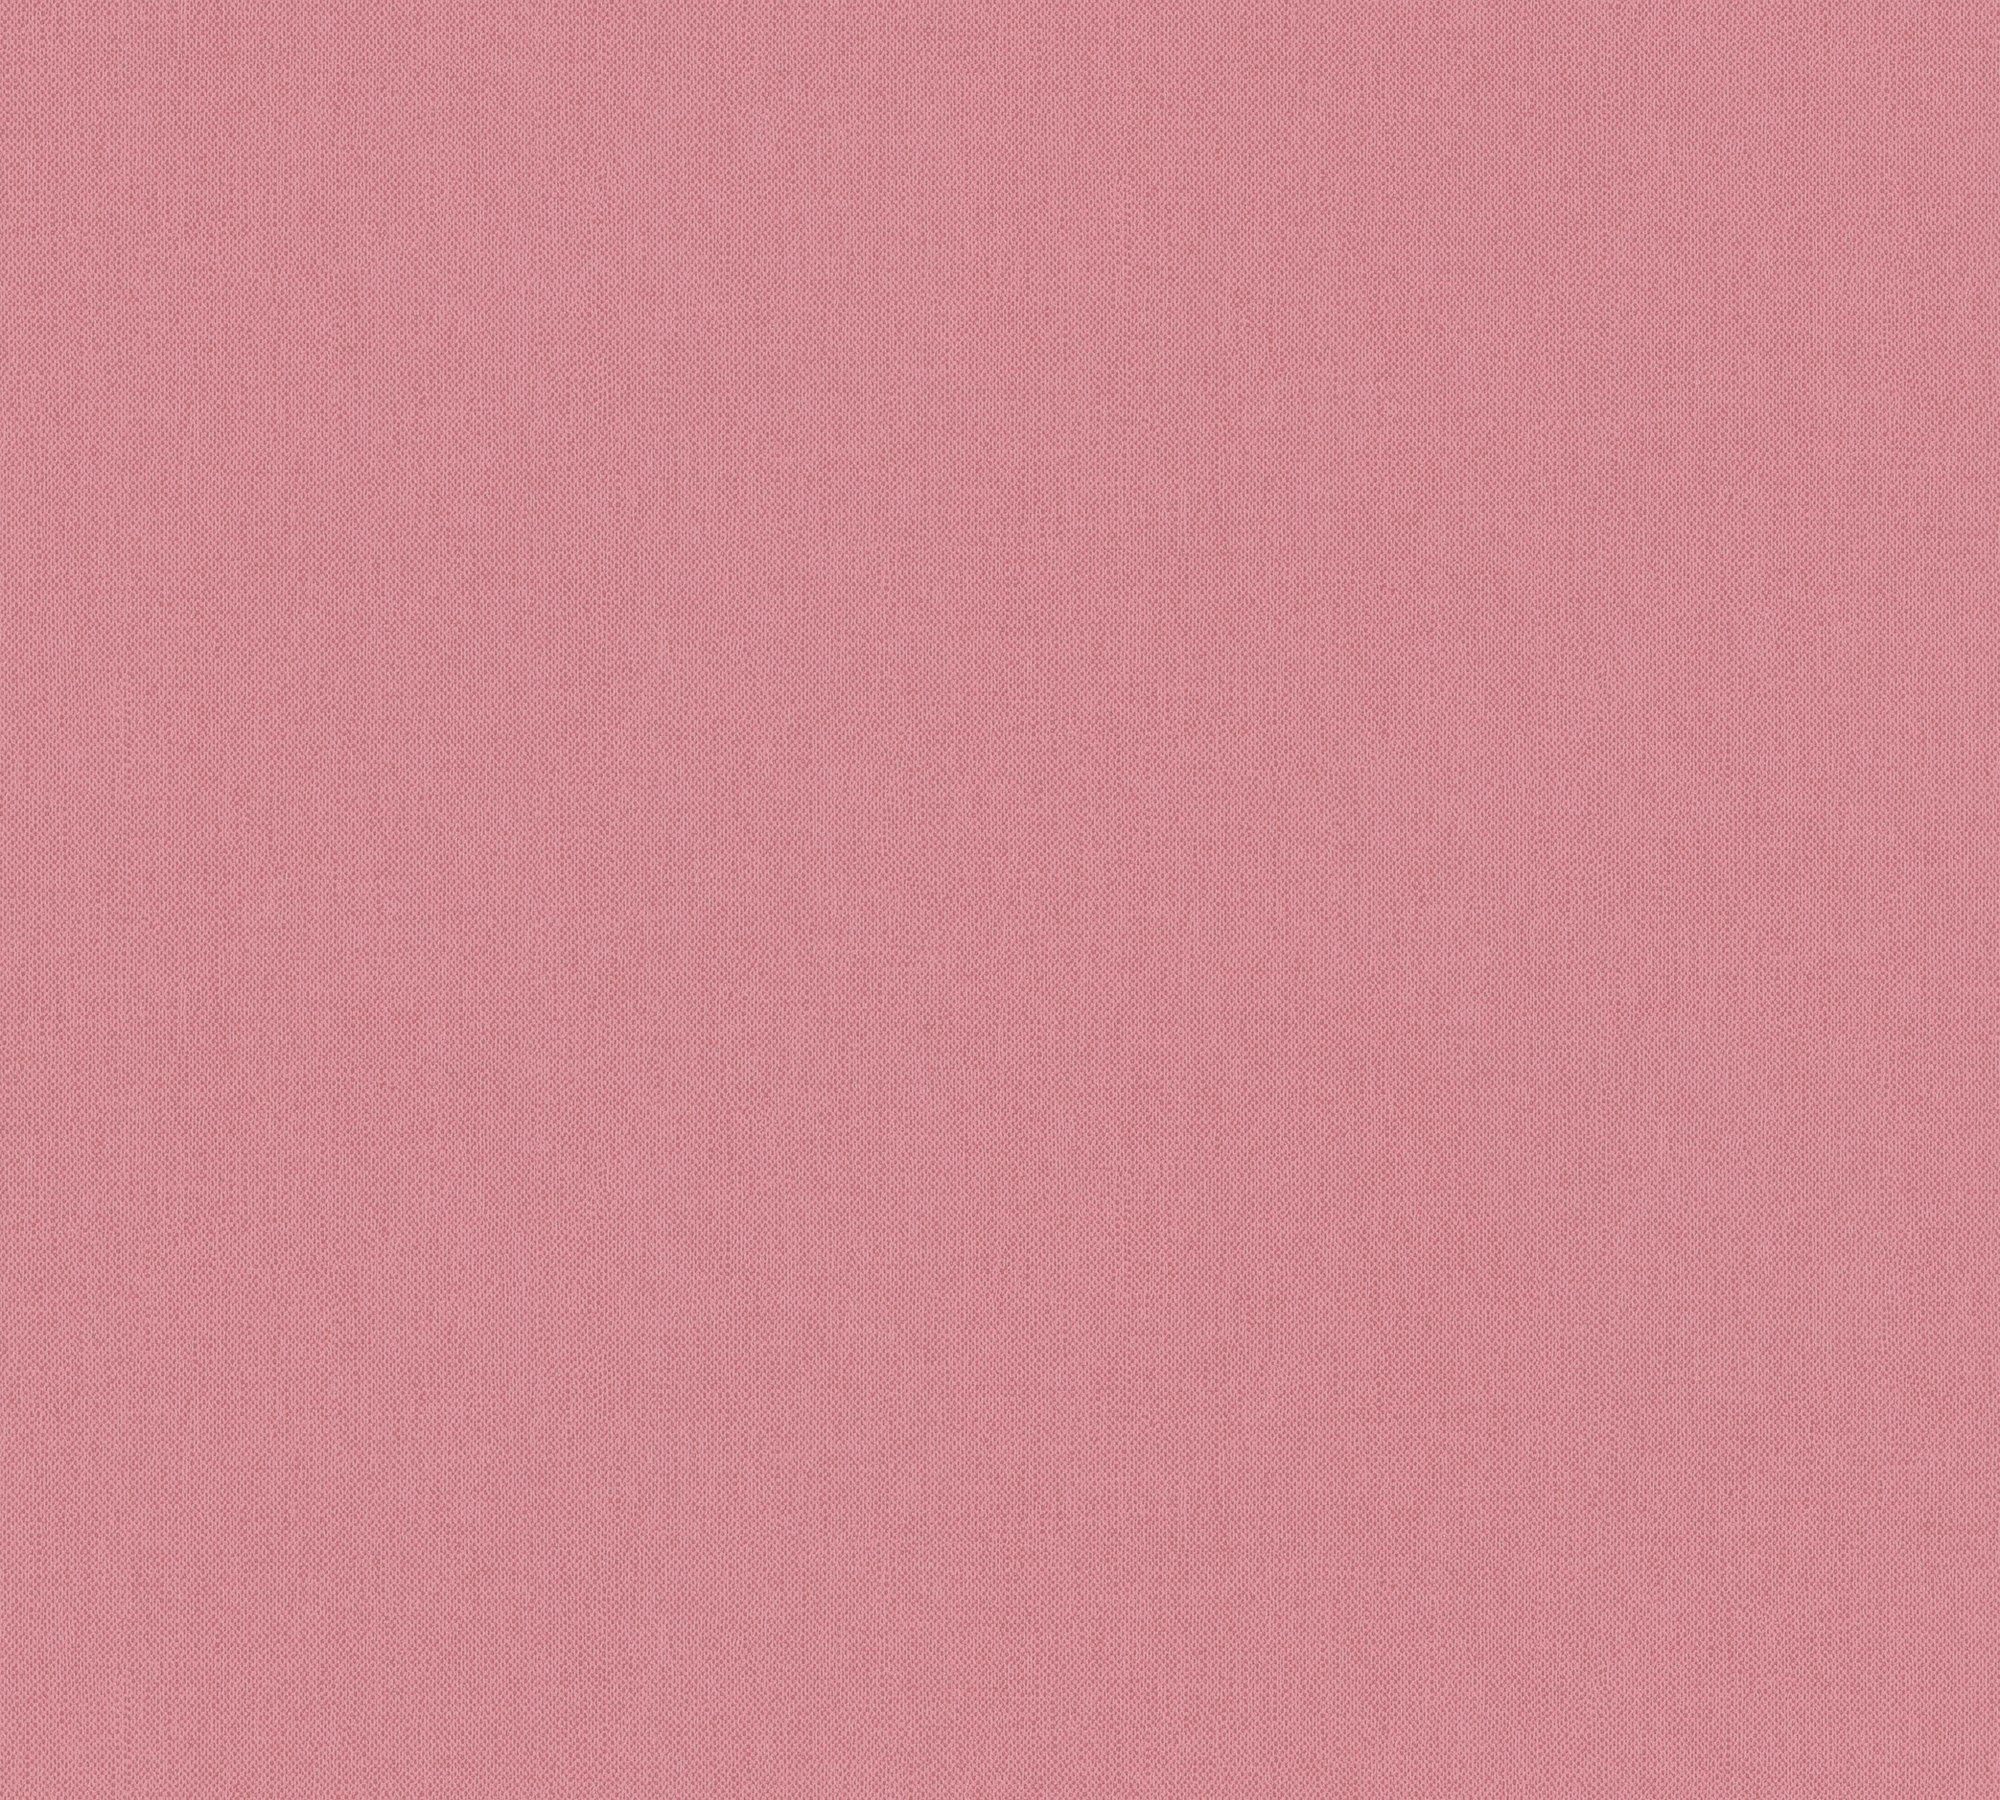 einfarbig, Vliestapete rosa Impression, Paper unifarben, Architects Tapete glatt, Uni Floral